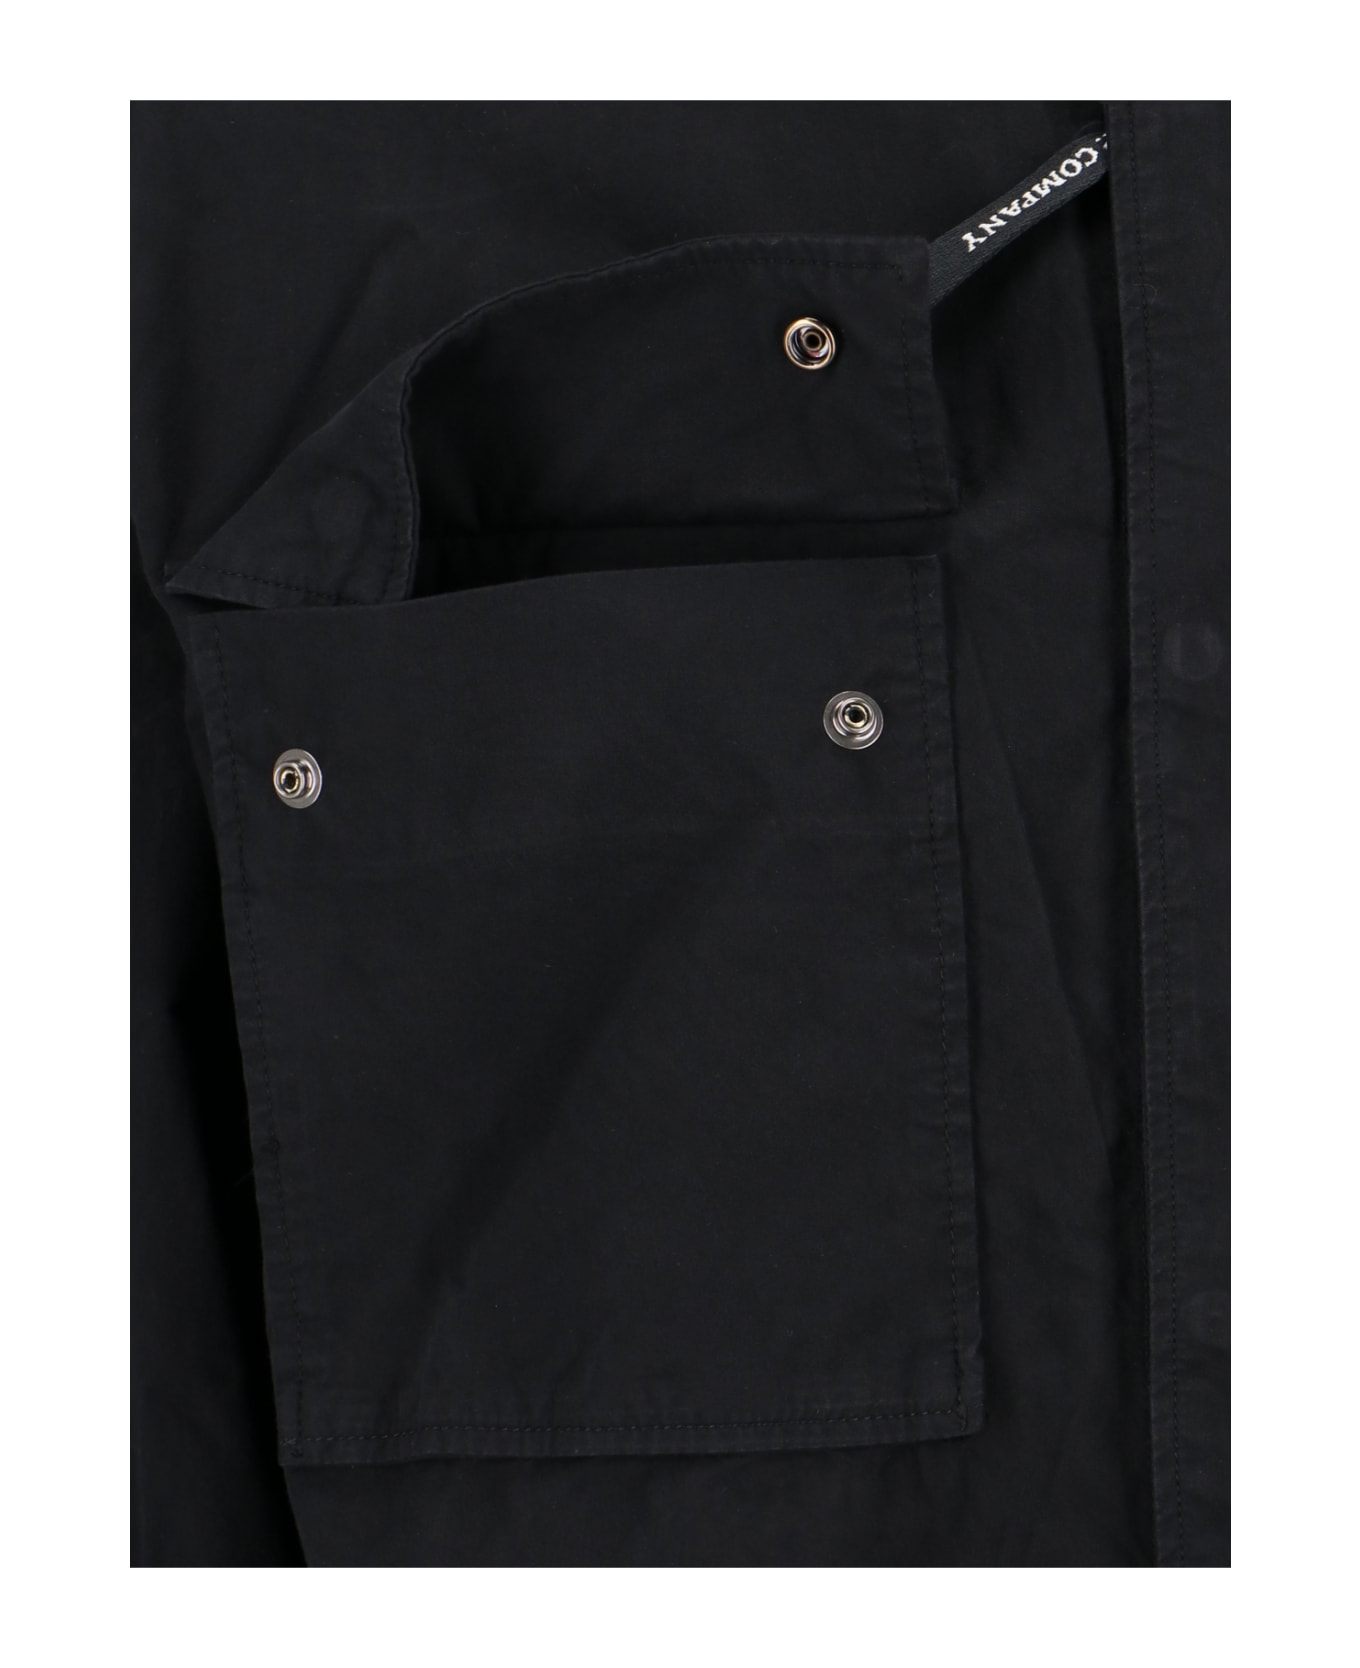 C.P. Company 'lens' Shirt Jacket - Black シャツ